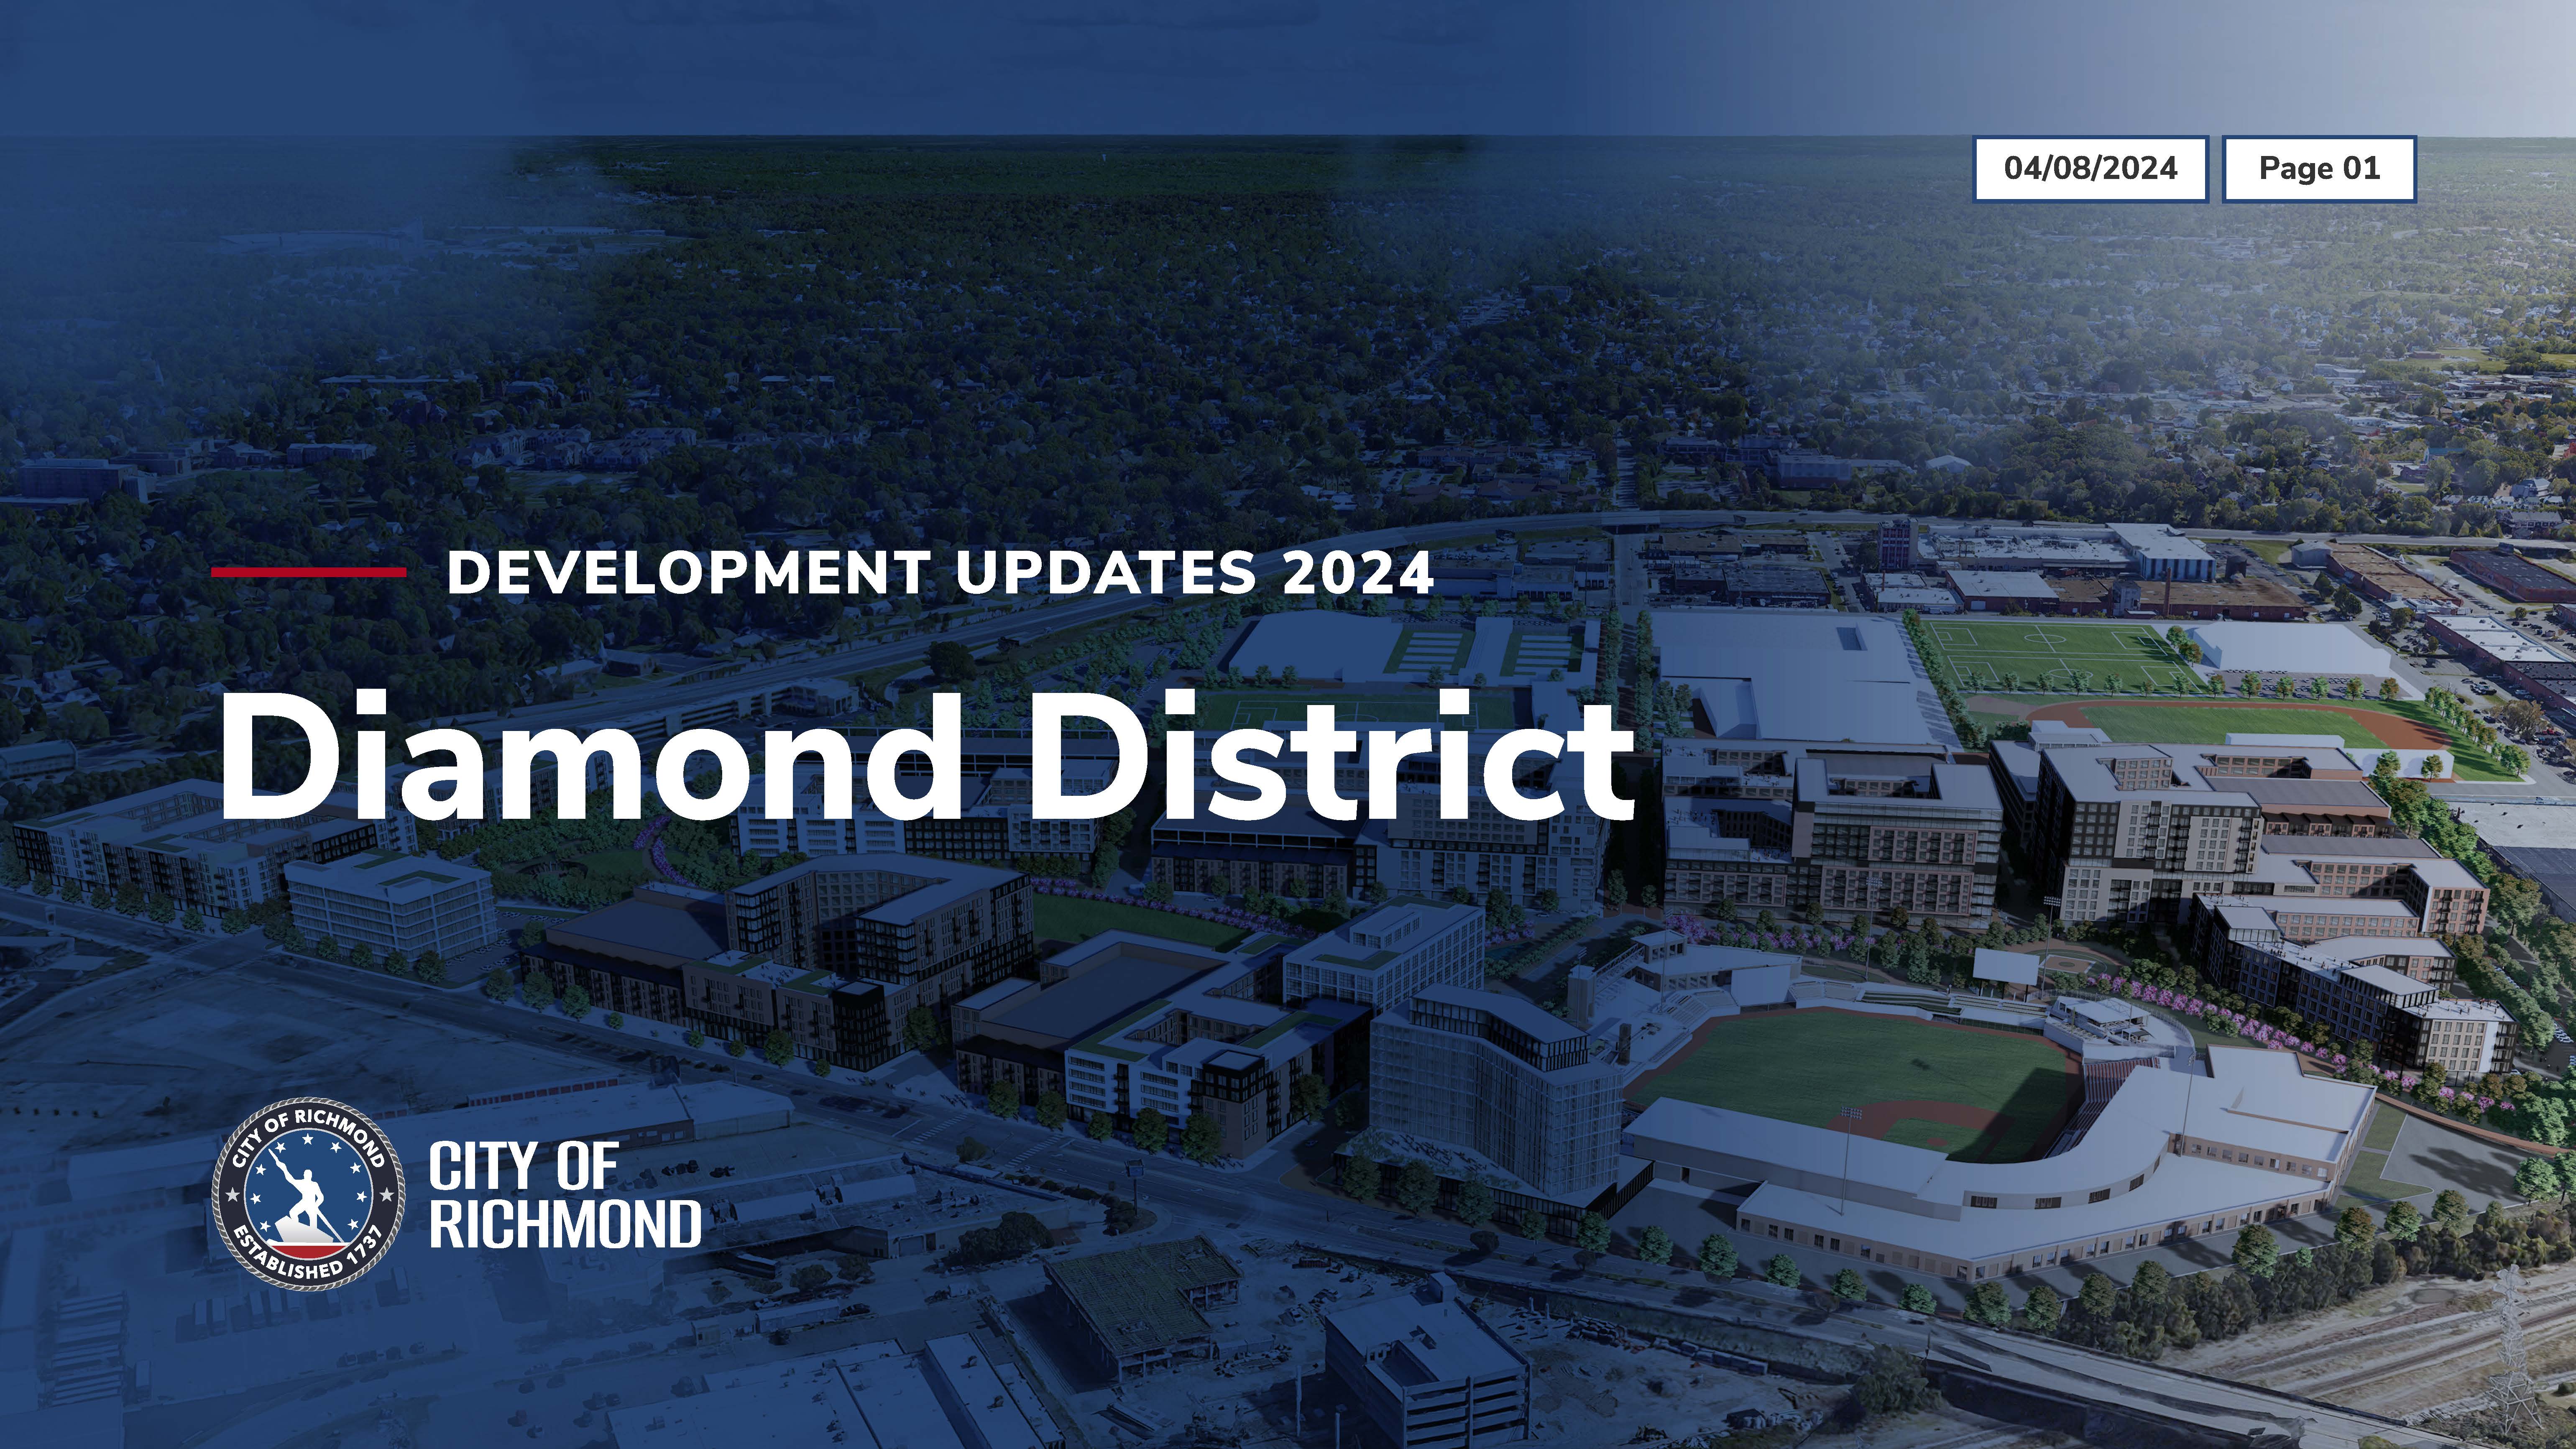 Updated rendering of the Diamond District development plan